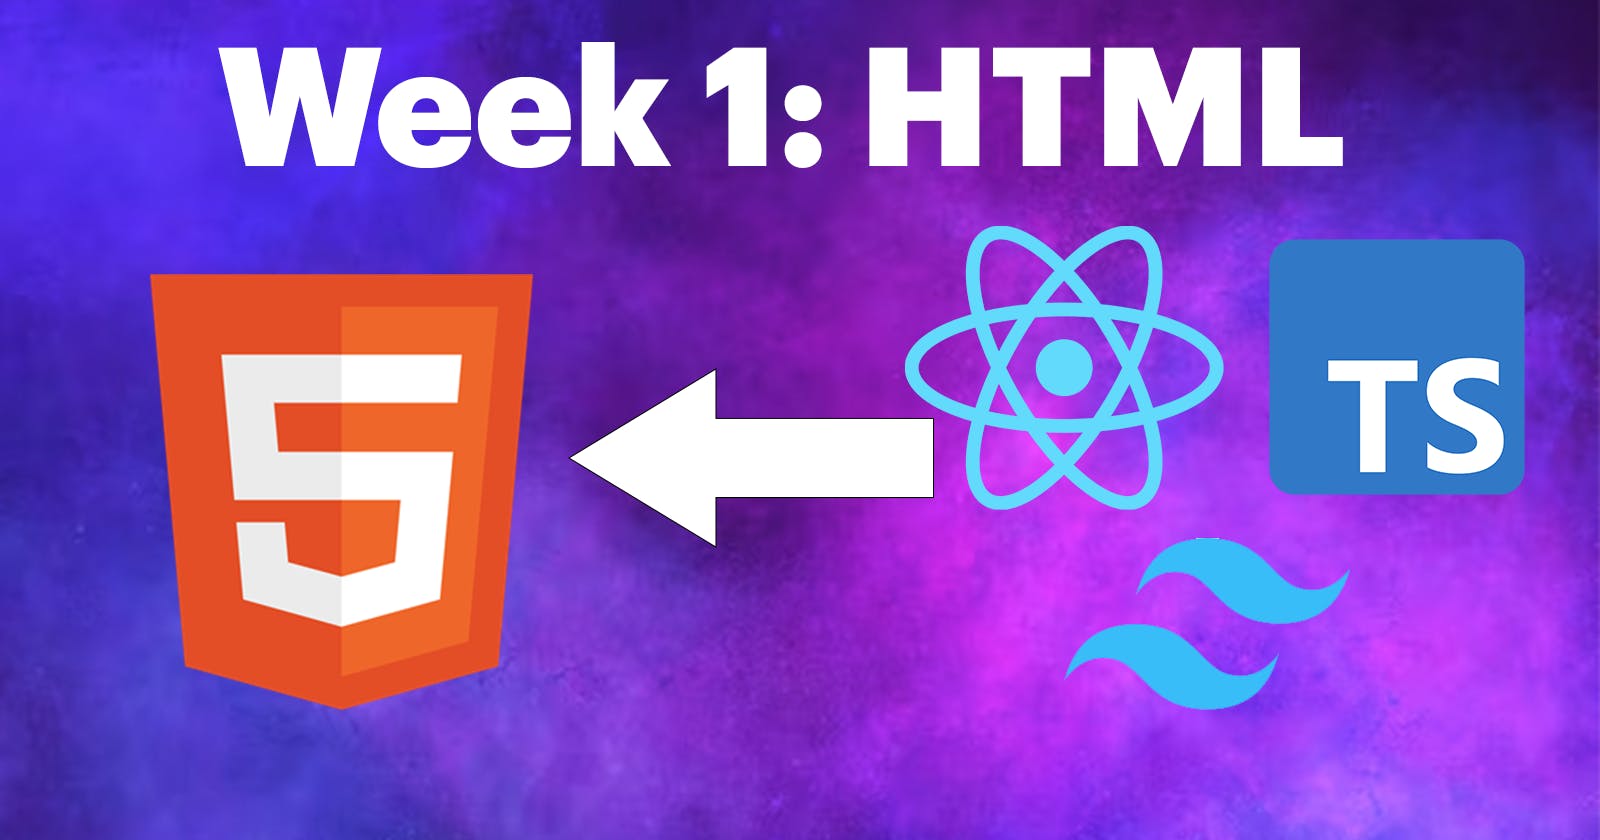 Journey to Fullstack - Week 1:HTML